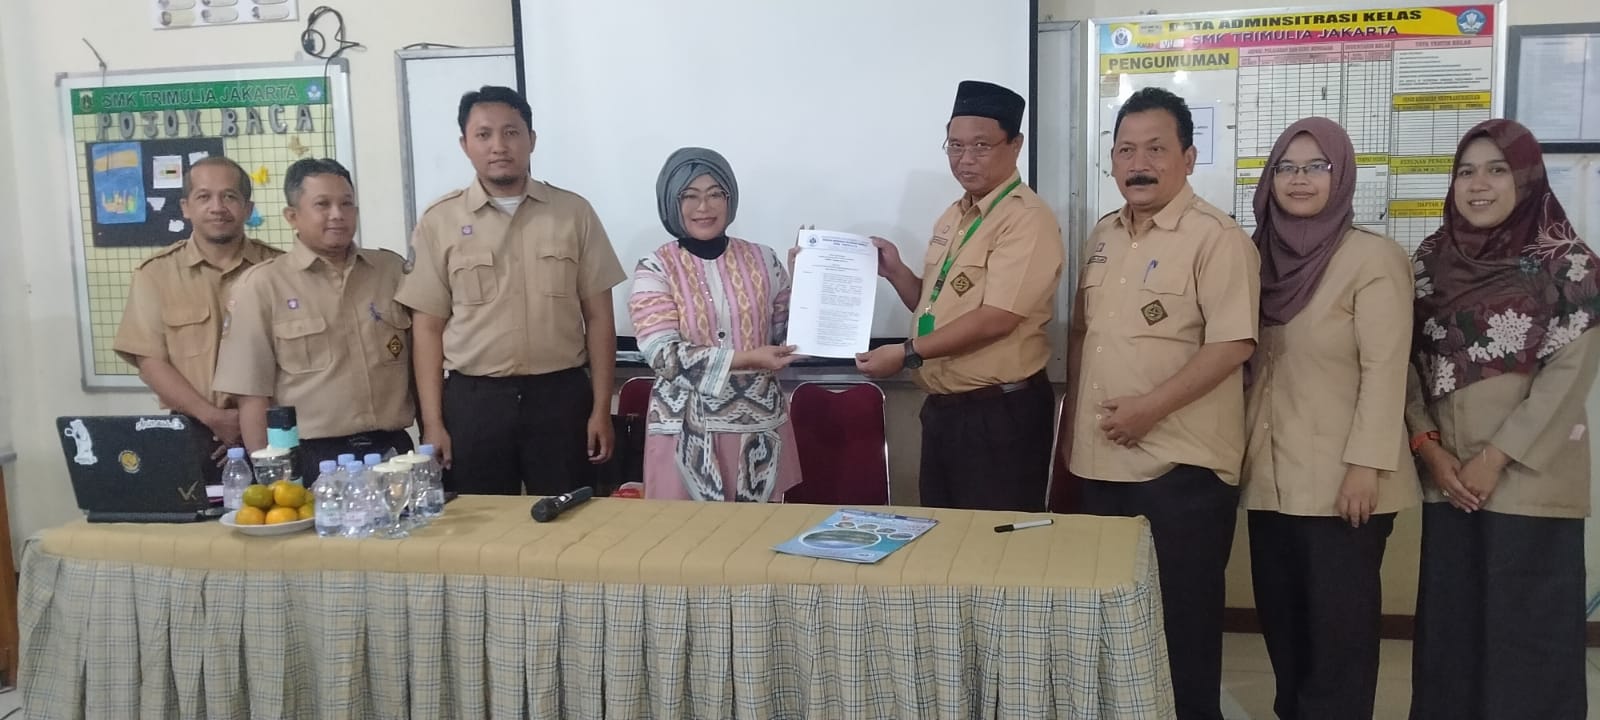 SMK Trimulia Jakarta melaksanakan Program Laboratorium Pancasila